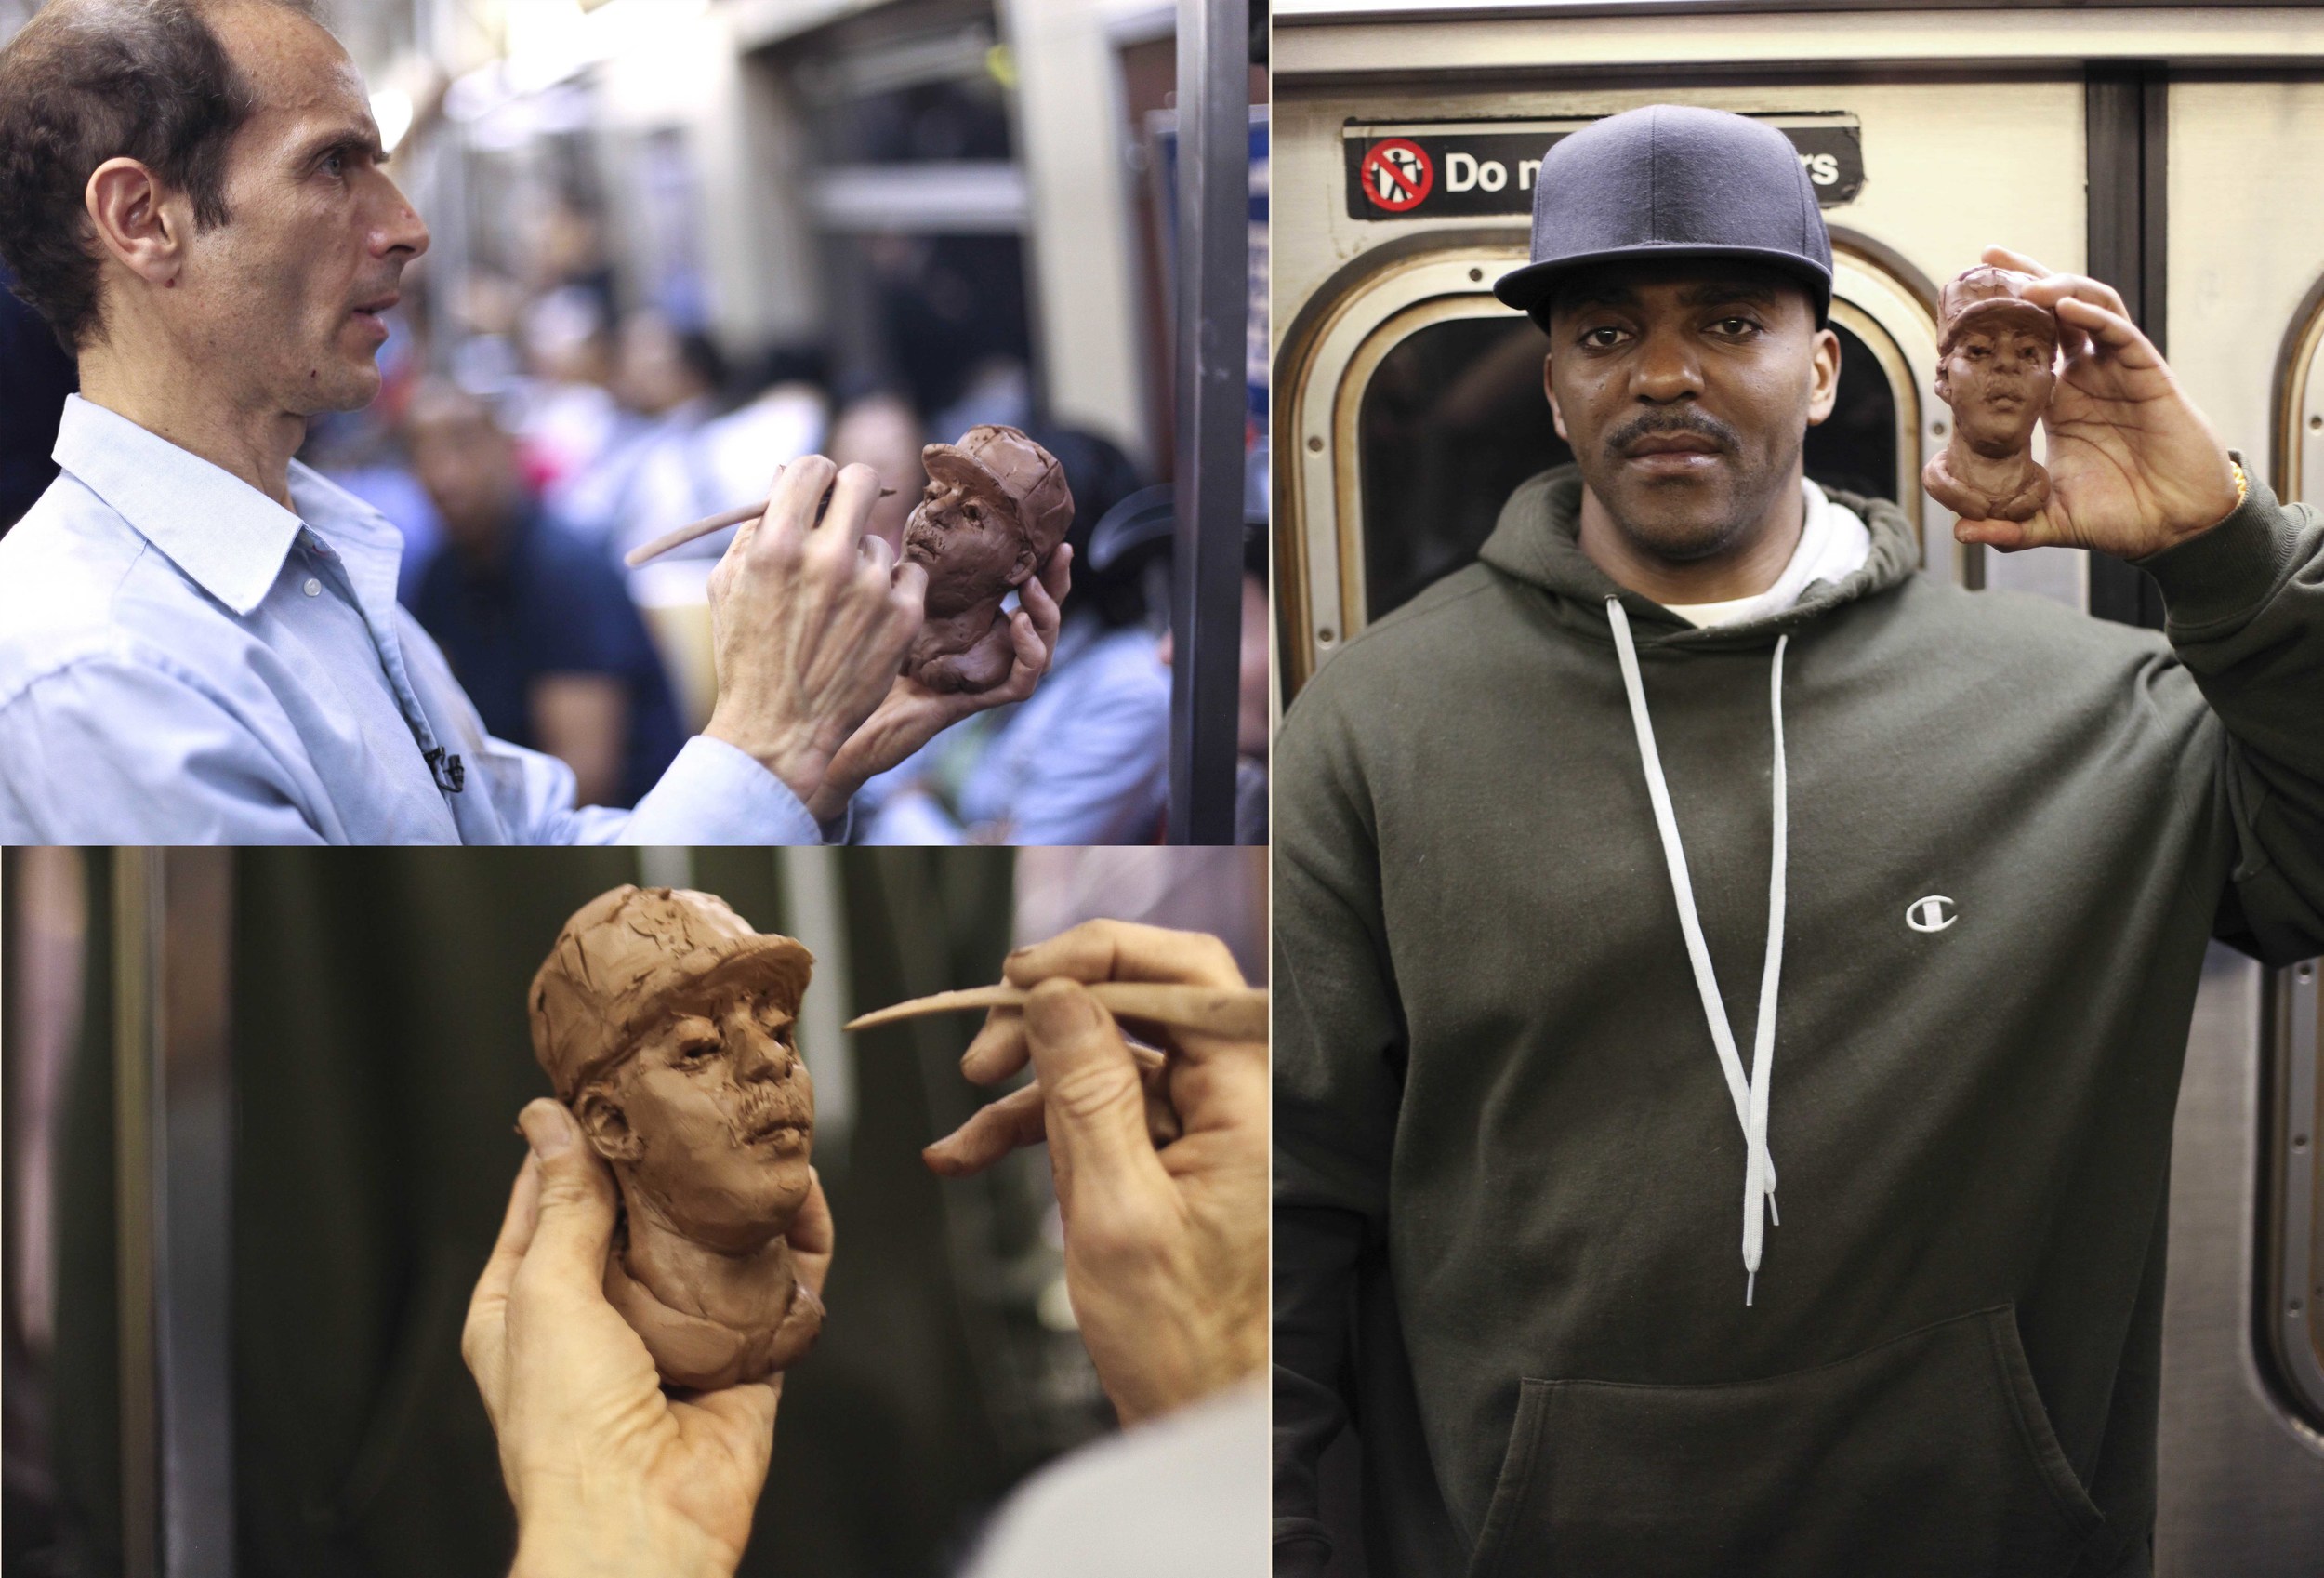 The Subway Sculptor